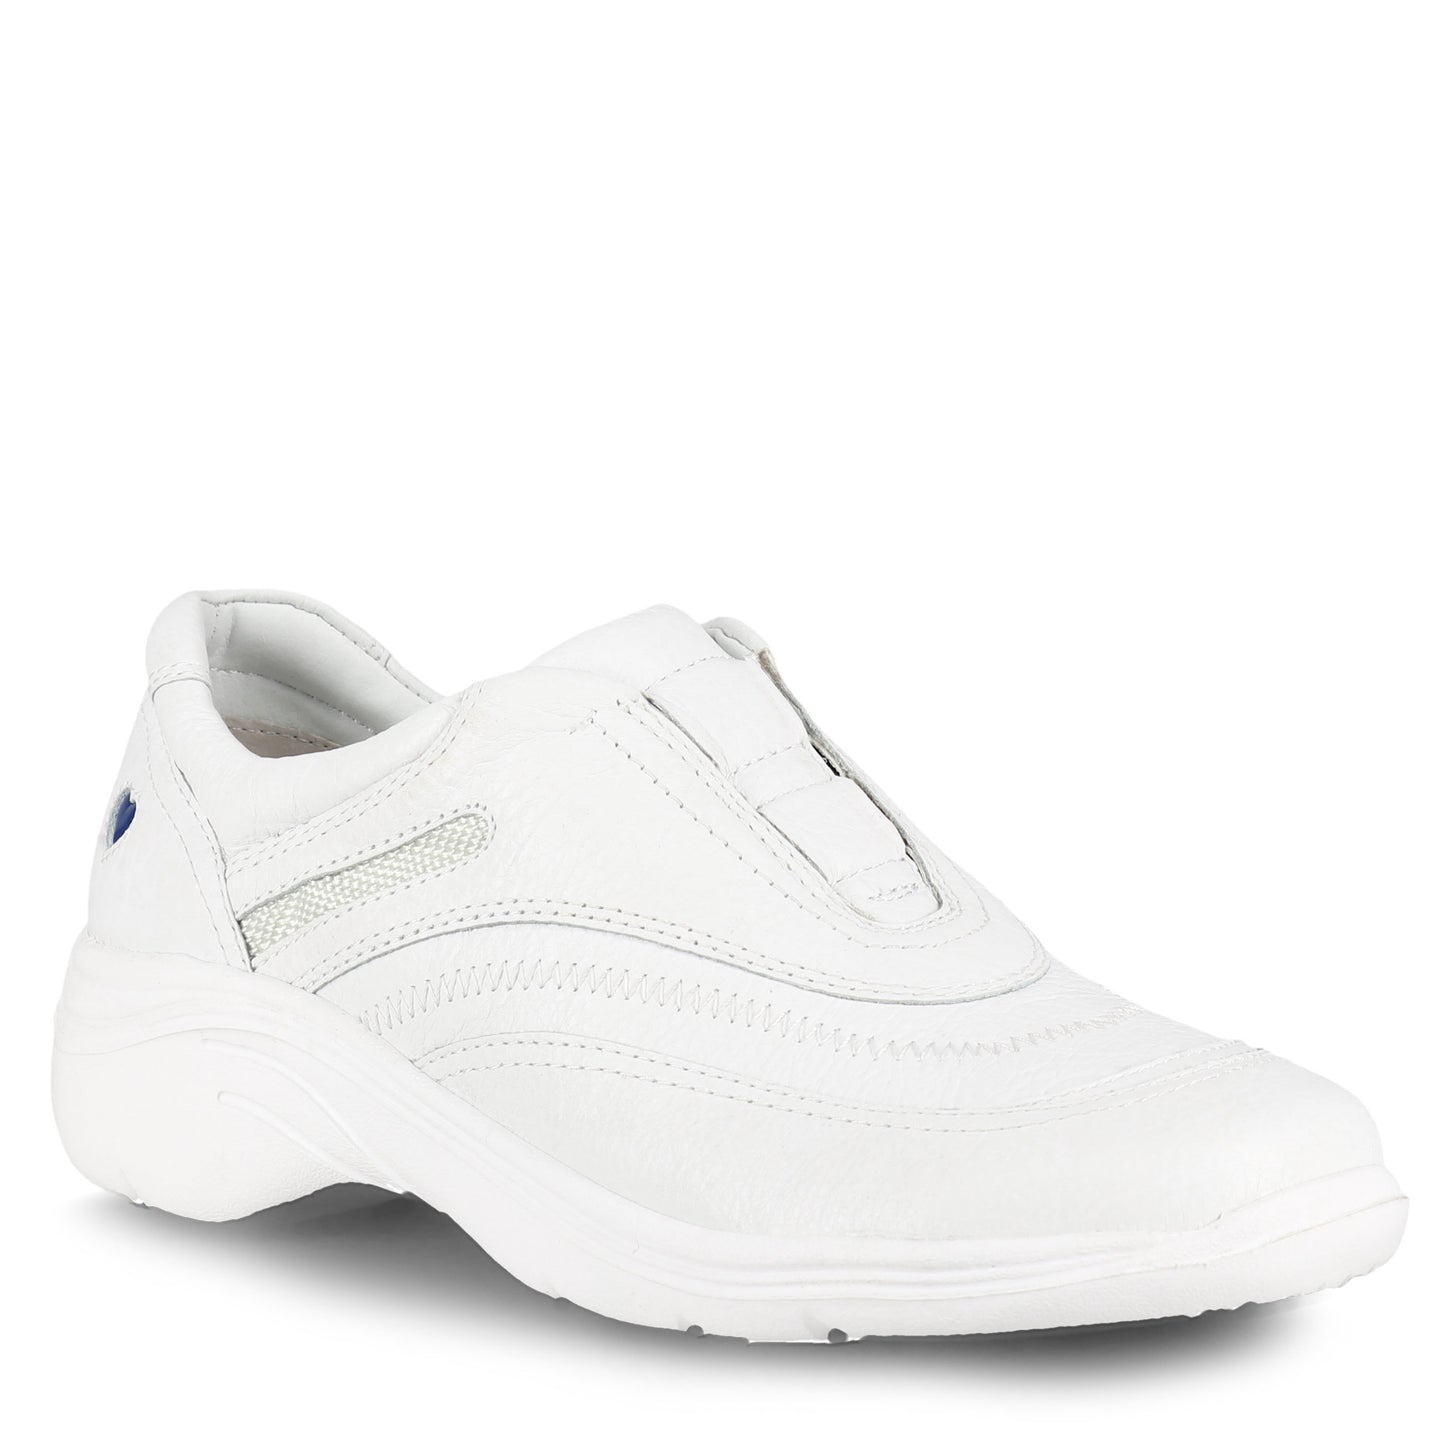 Nursemates Diana White Shoes